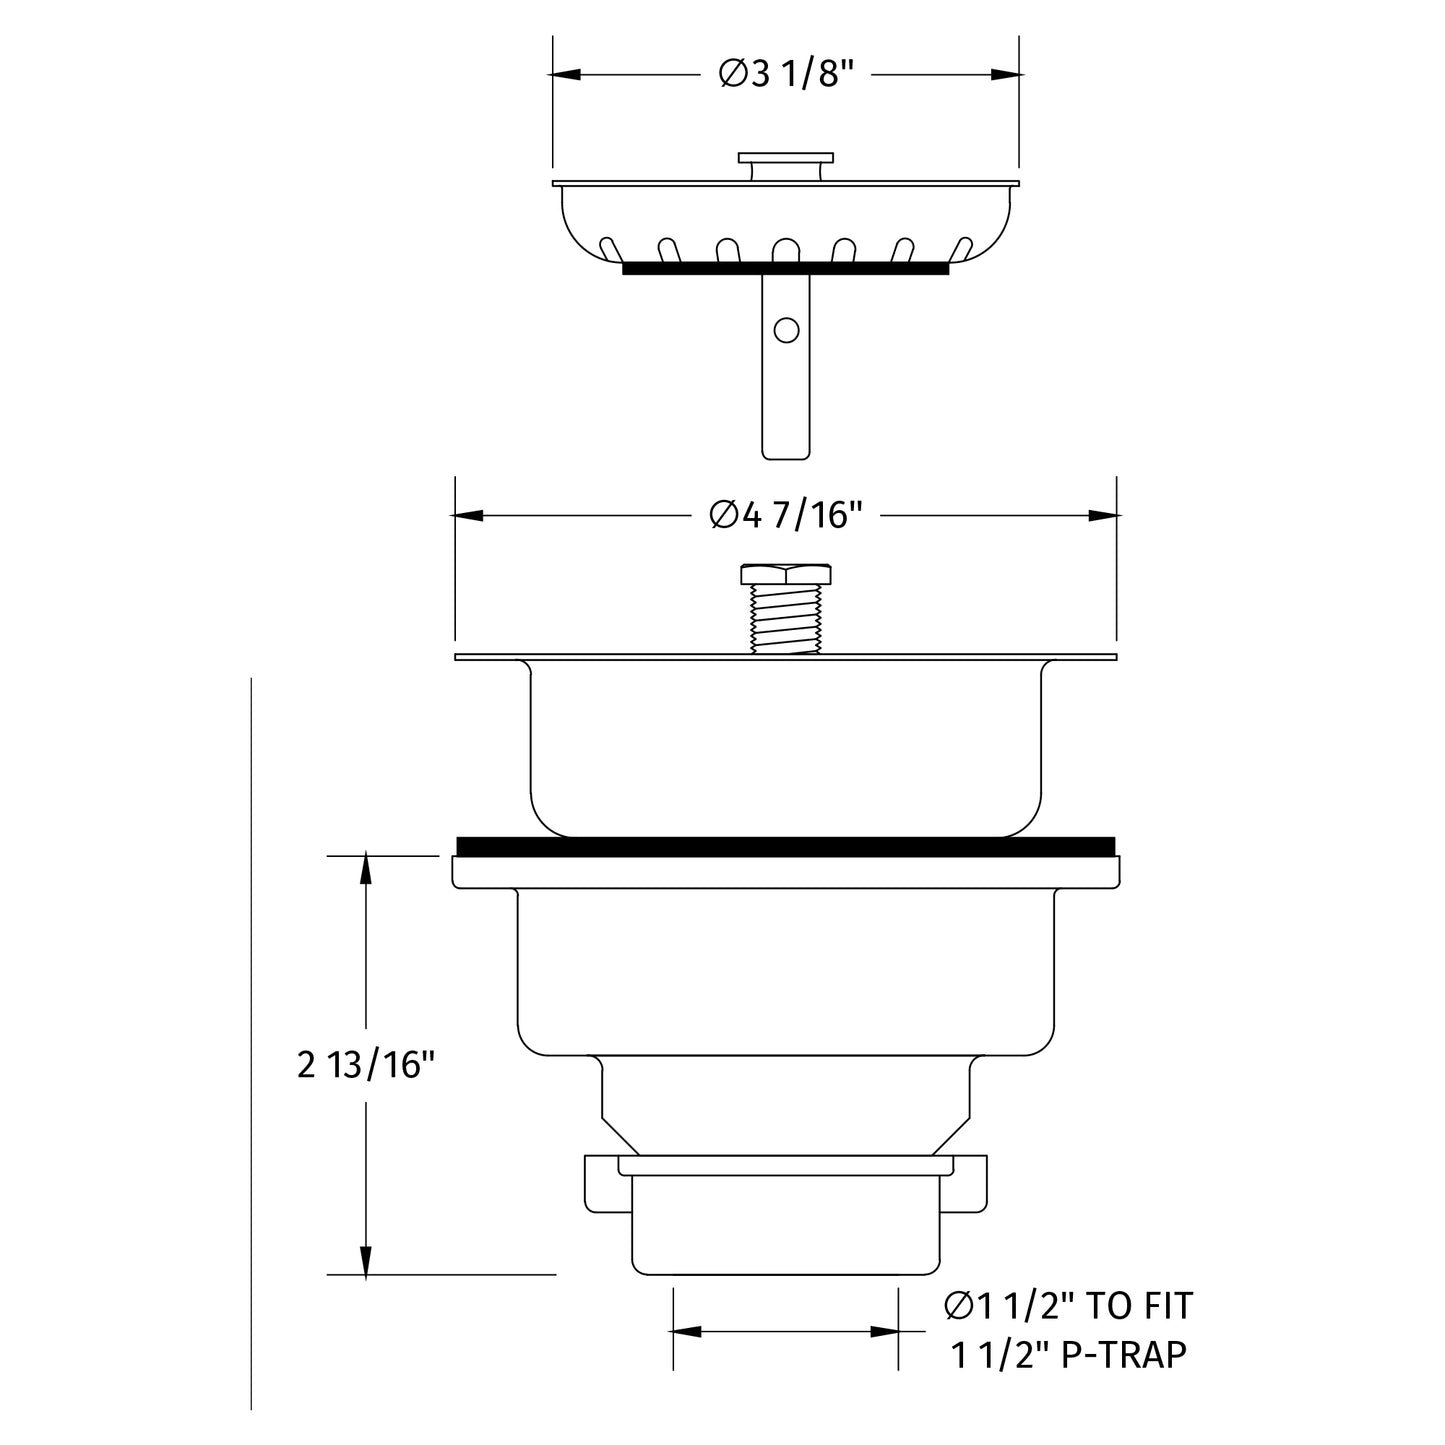 MT300/BRN - 3-1/2" Deluxe Stembell Kitchen Sink Strainer - Brushed Nickel